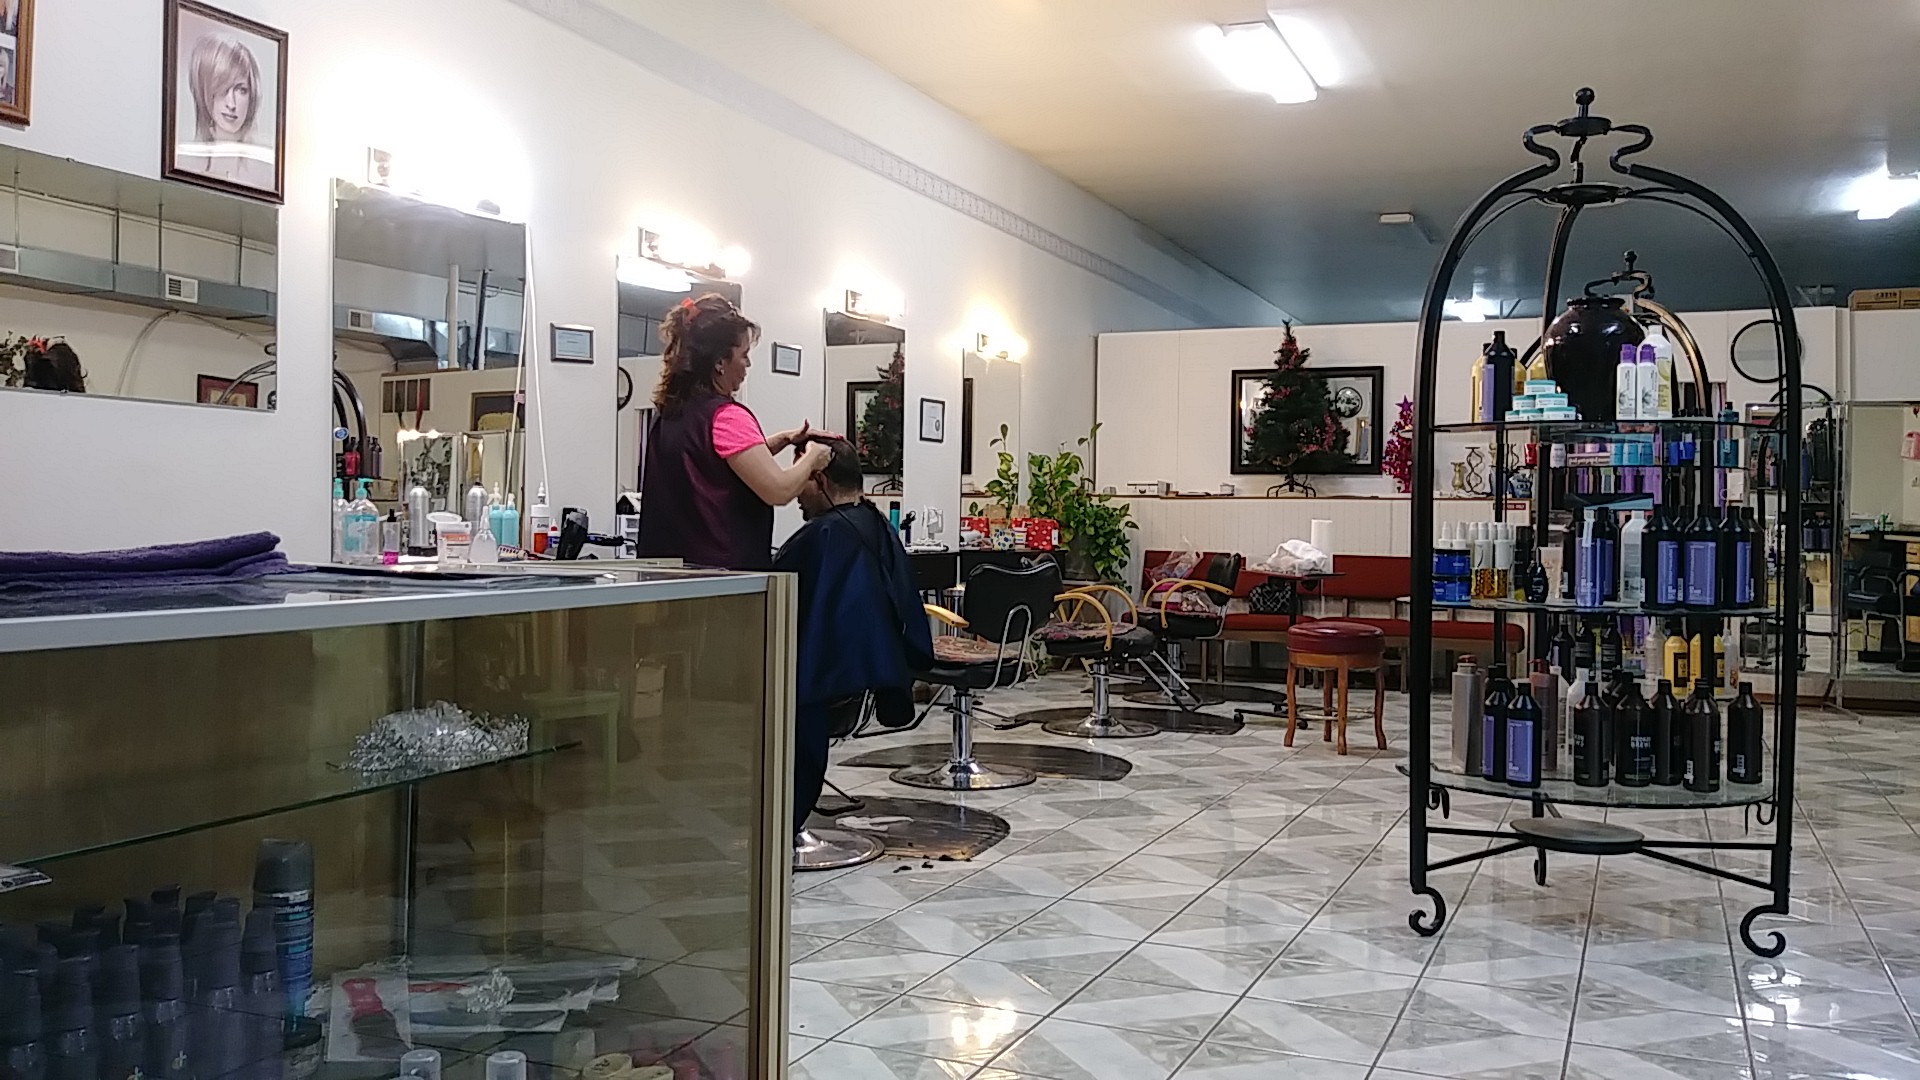 Rosa's Beauty Salon